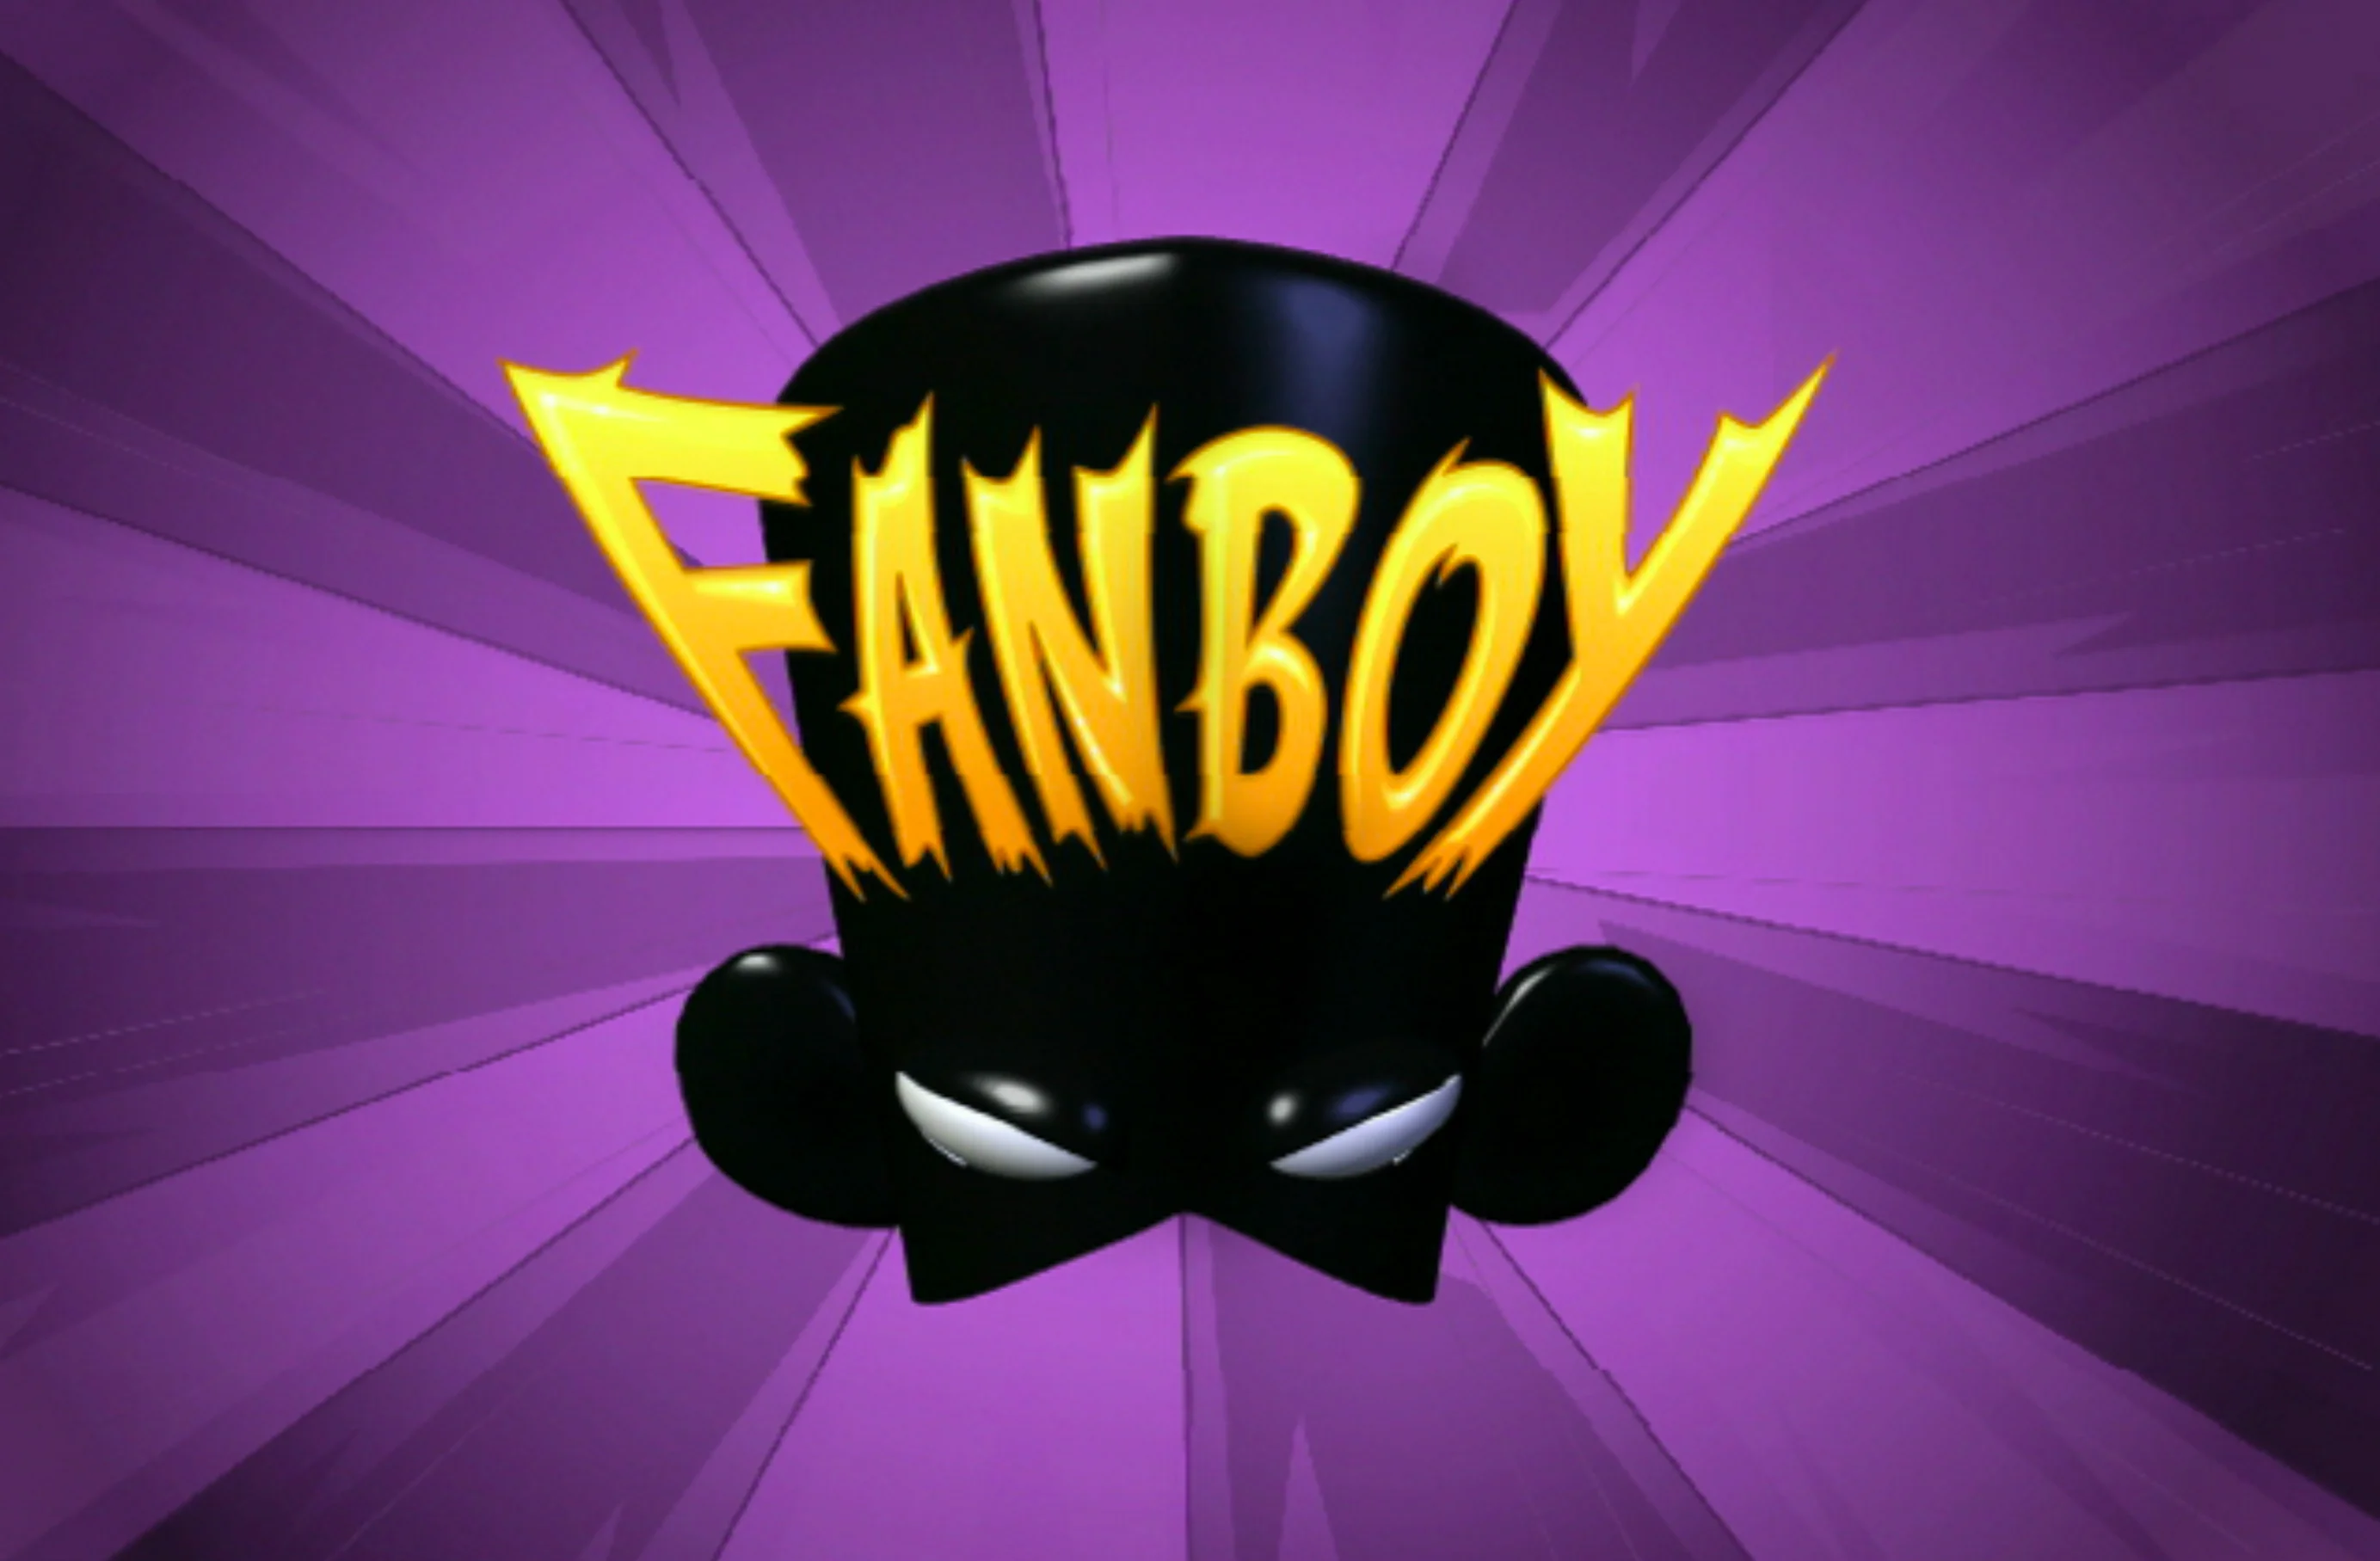 Fanboy on Vimeo